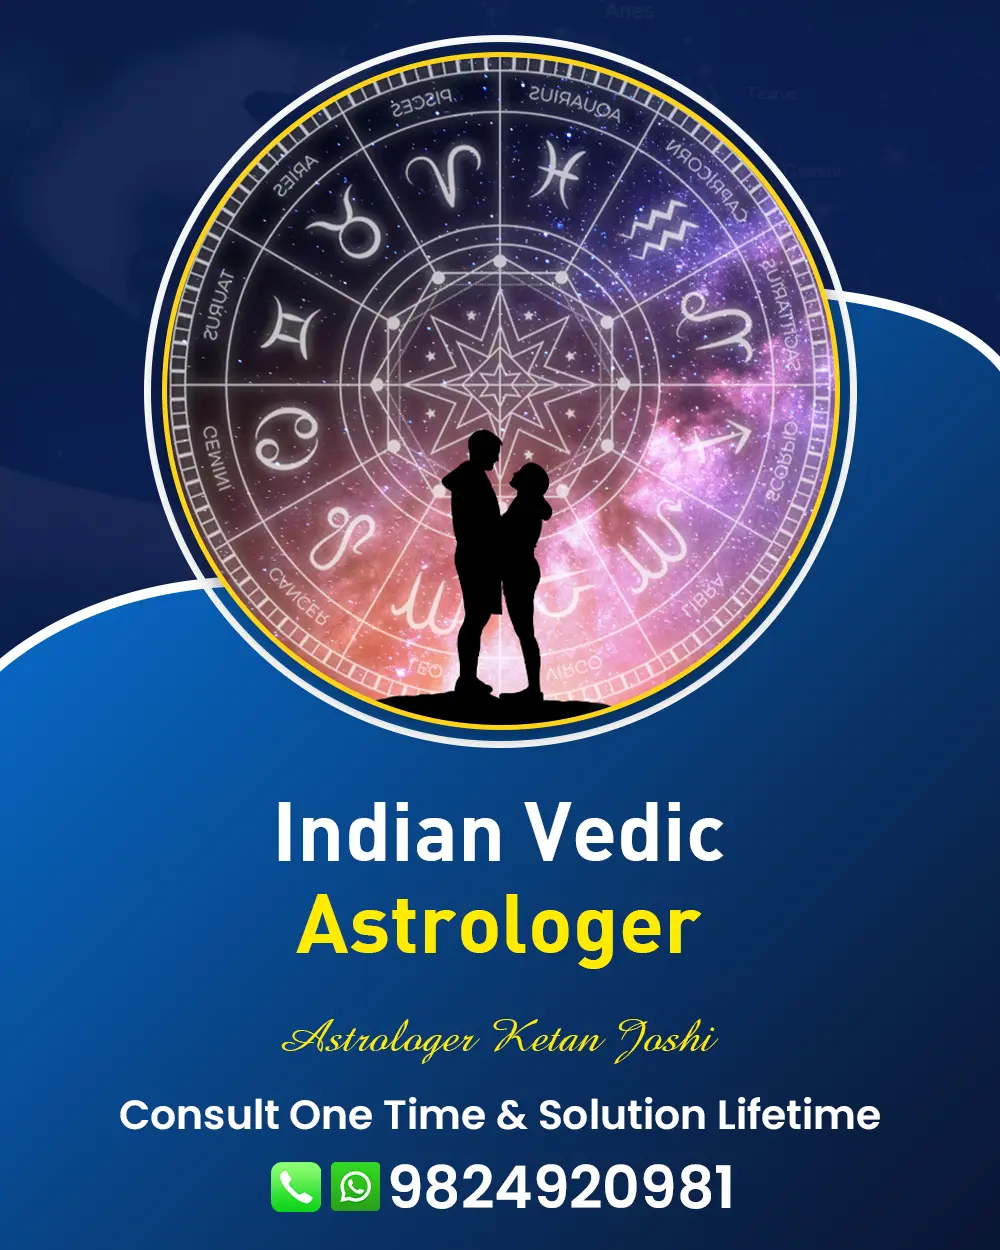 Popular Astrologer in India